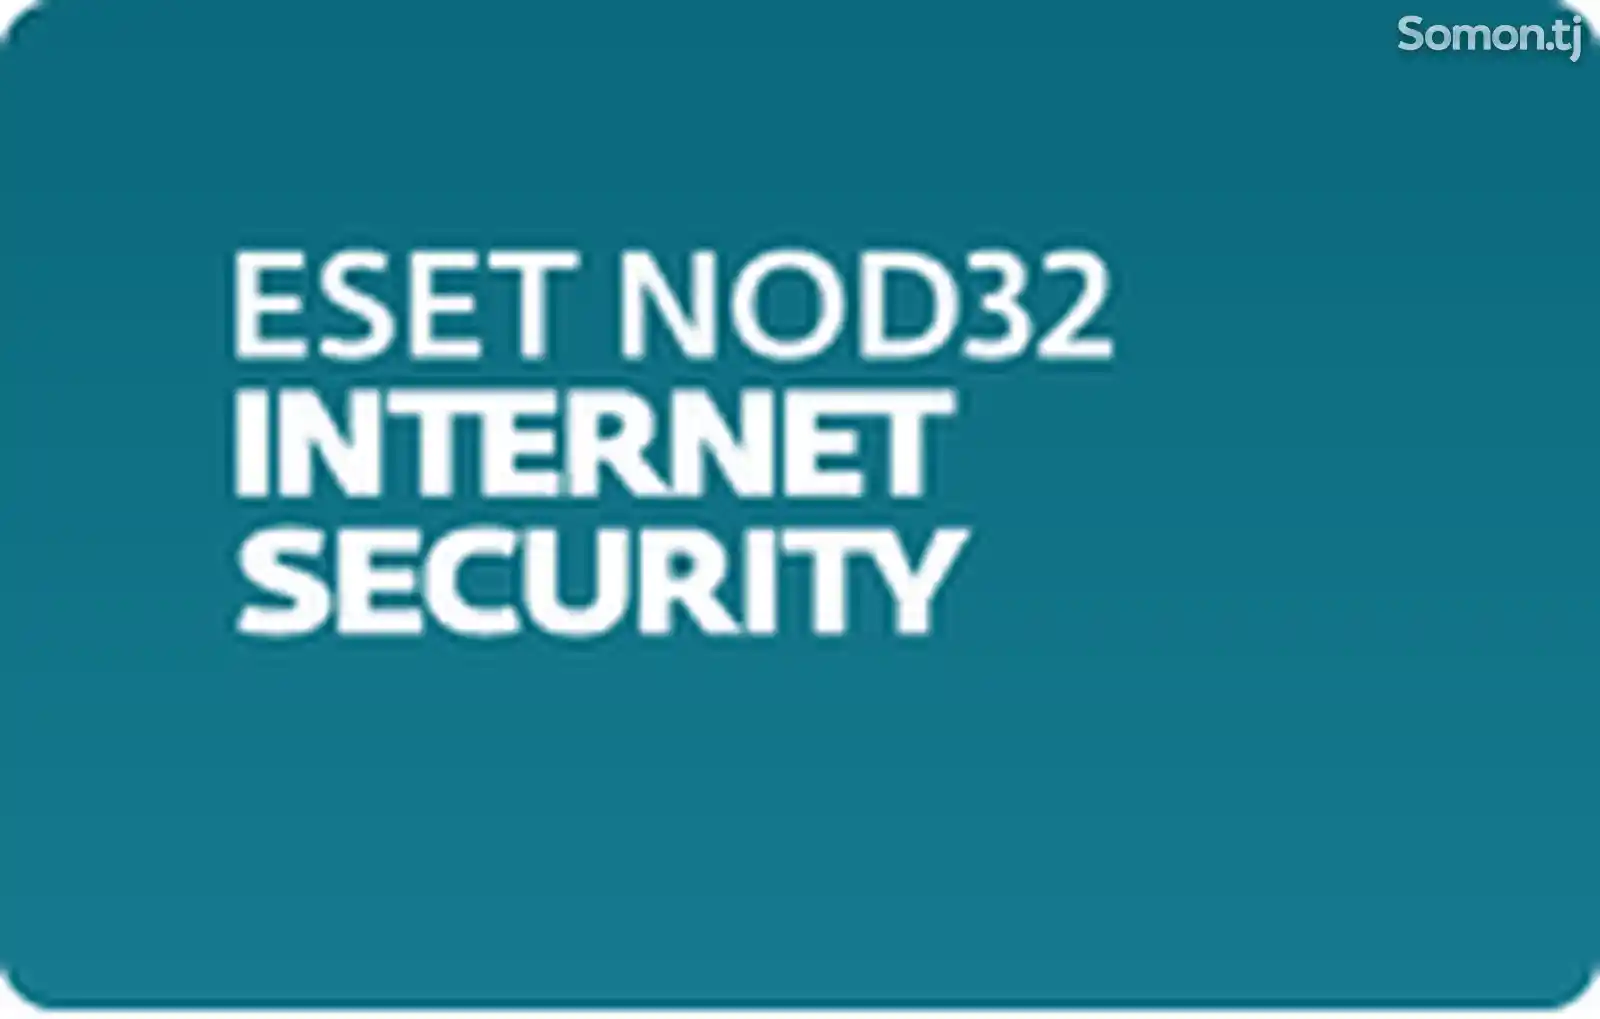 ESET NOD 32 Internet Security - иҷозатнома барои 1 роёна , 1 сол